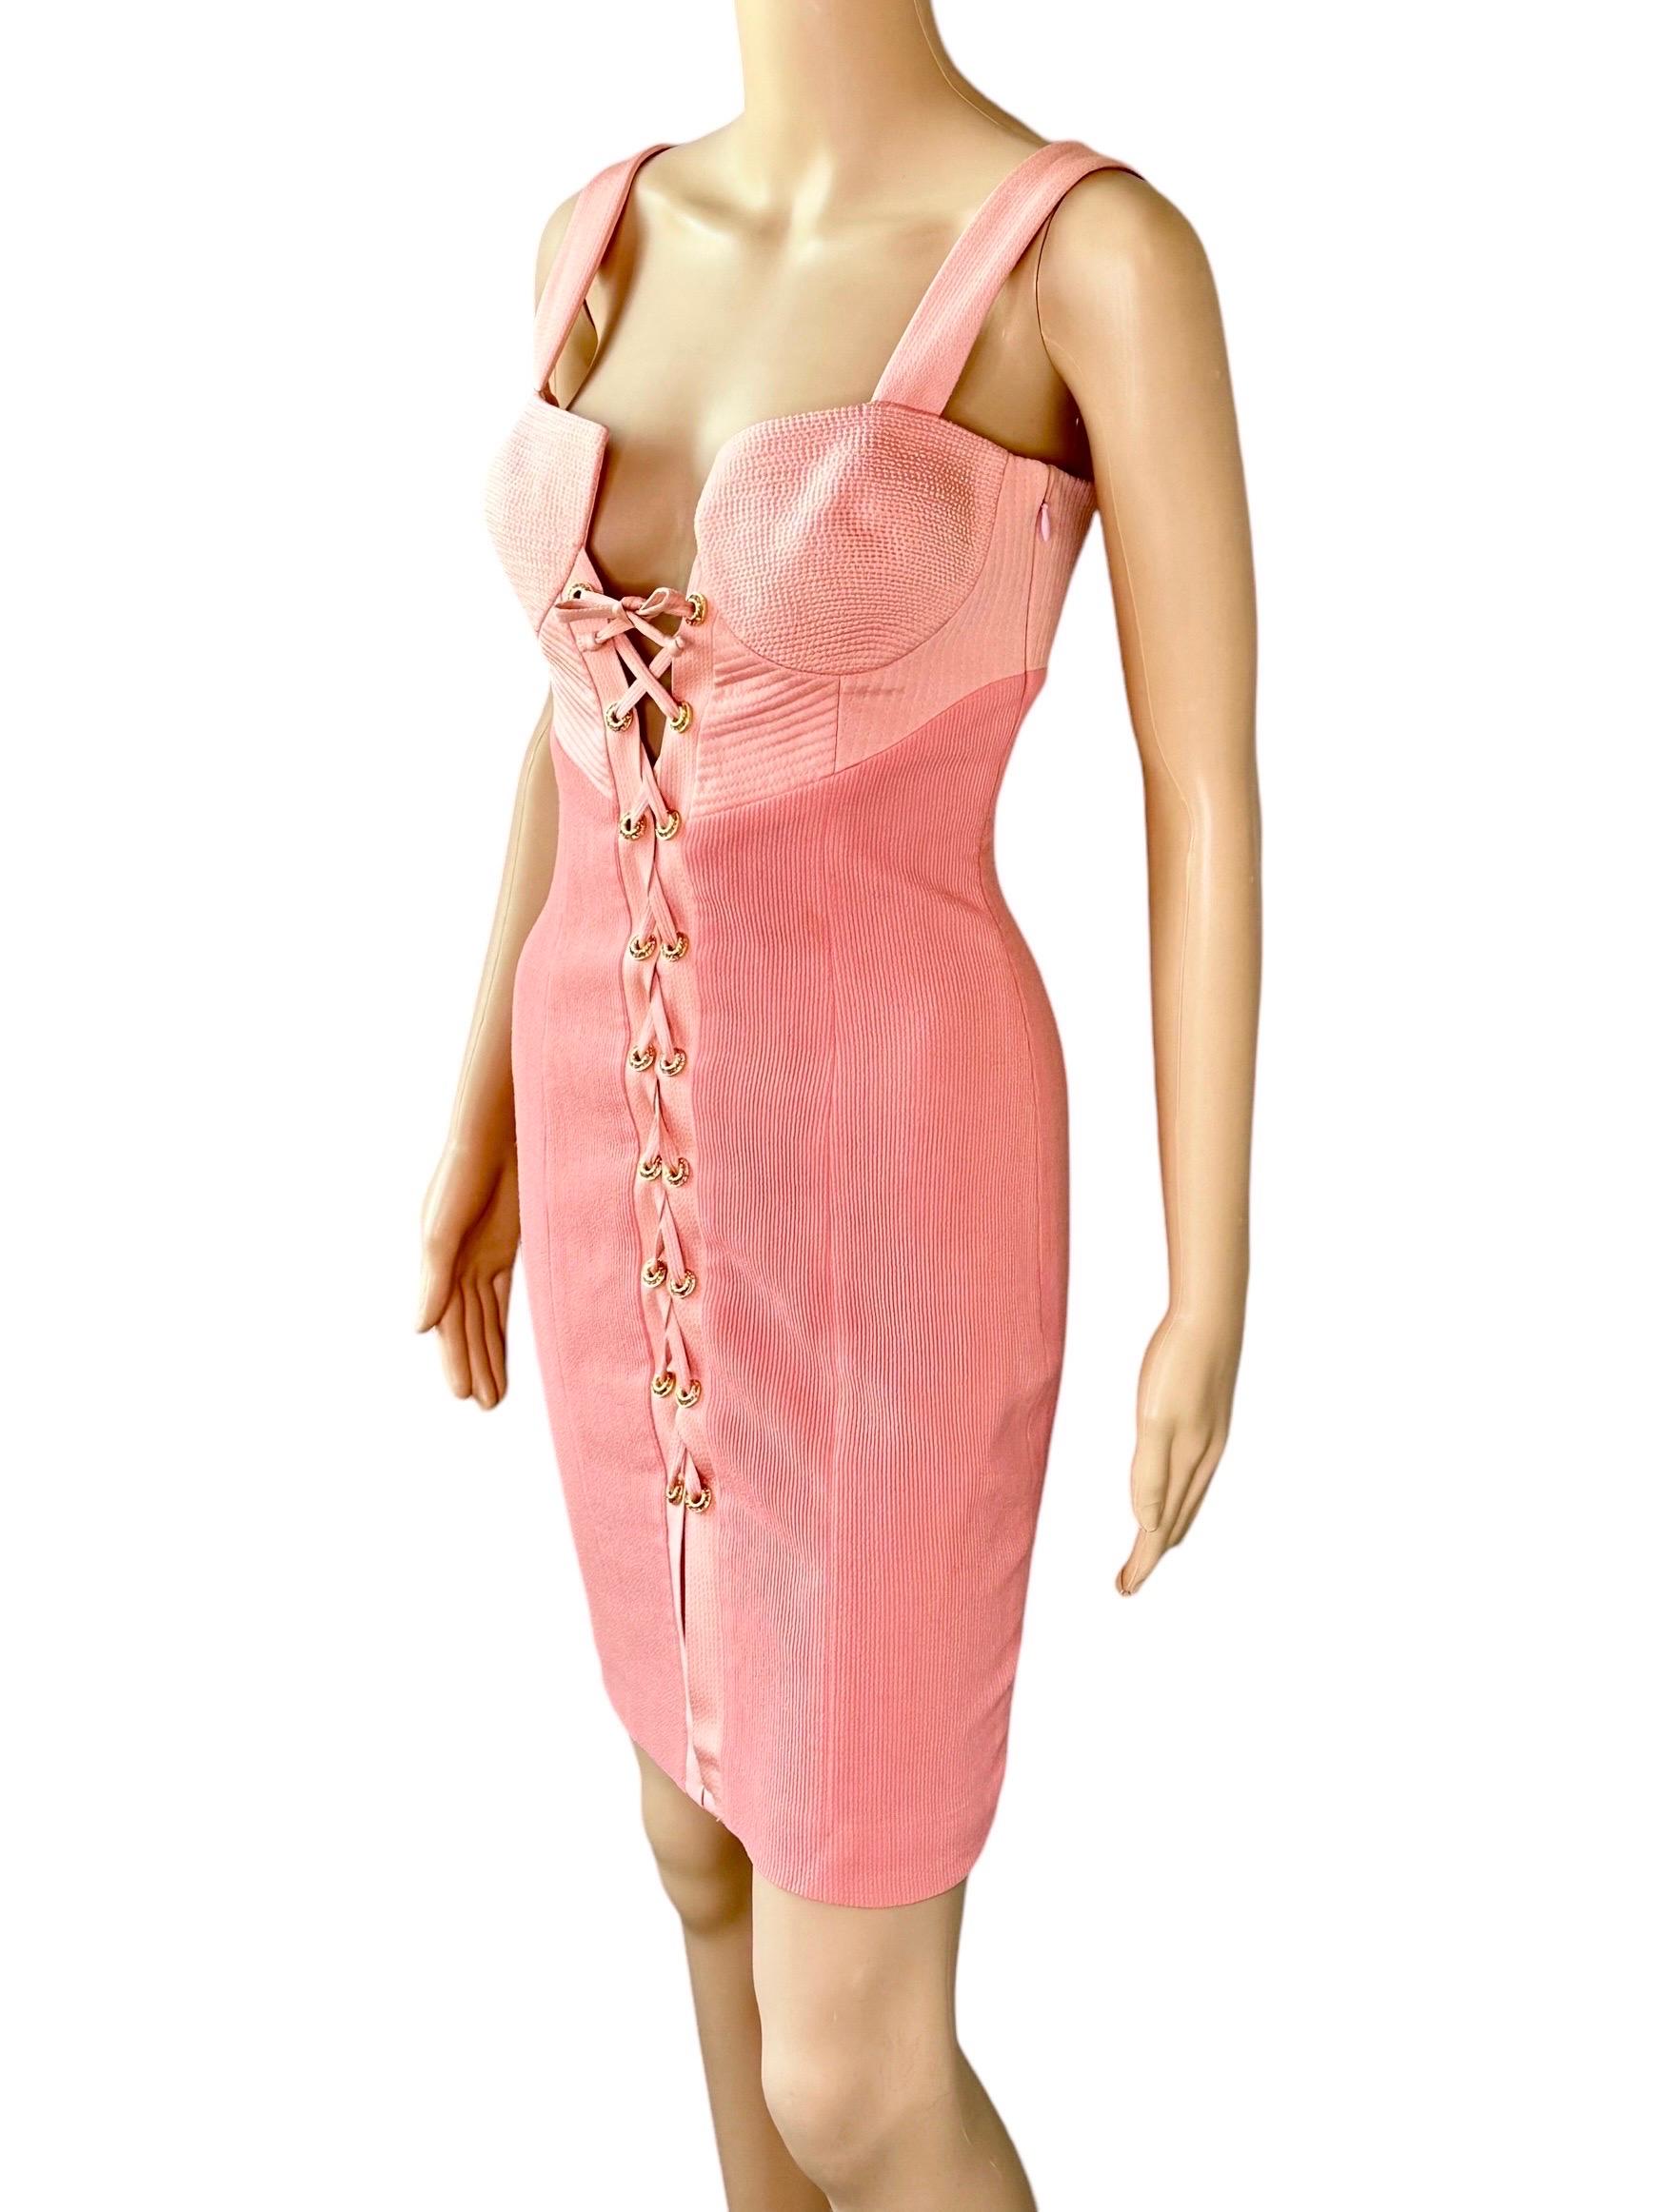 Gianni Versace S/S 1992 Couture Bustier Corset Lace Up Mini Dress 4